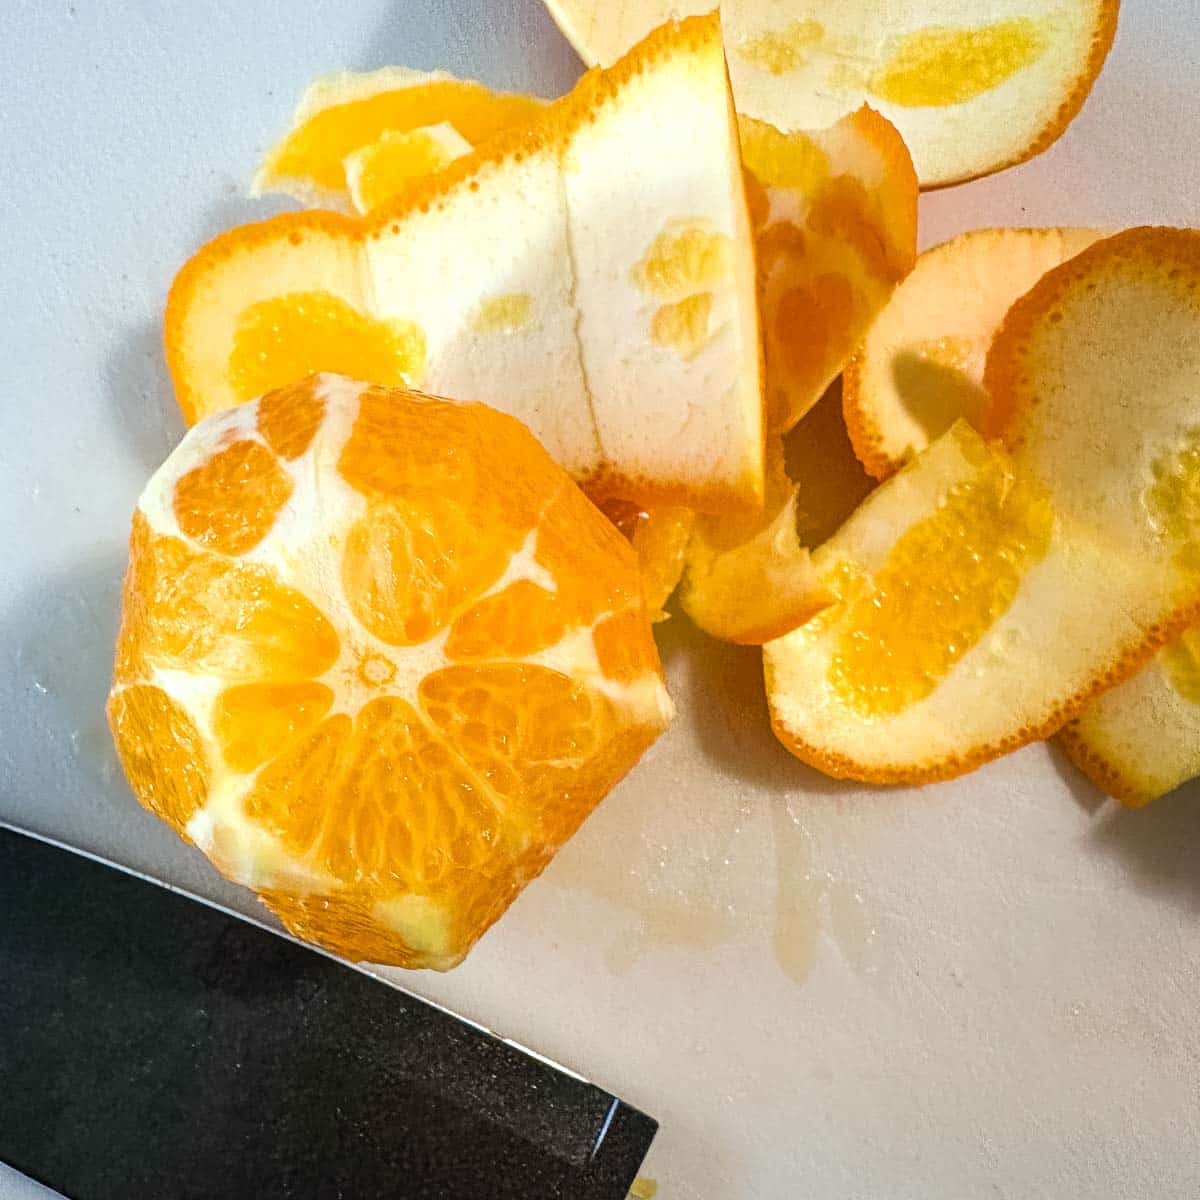 The peel is cut away from an orange.